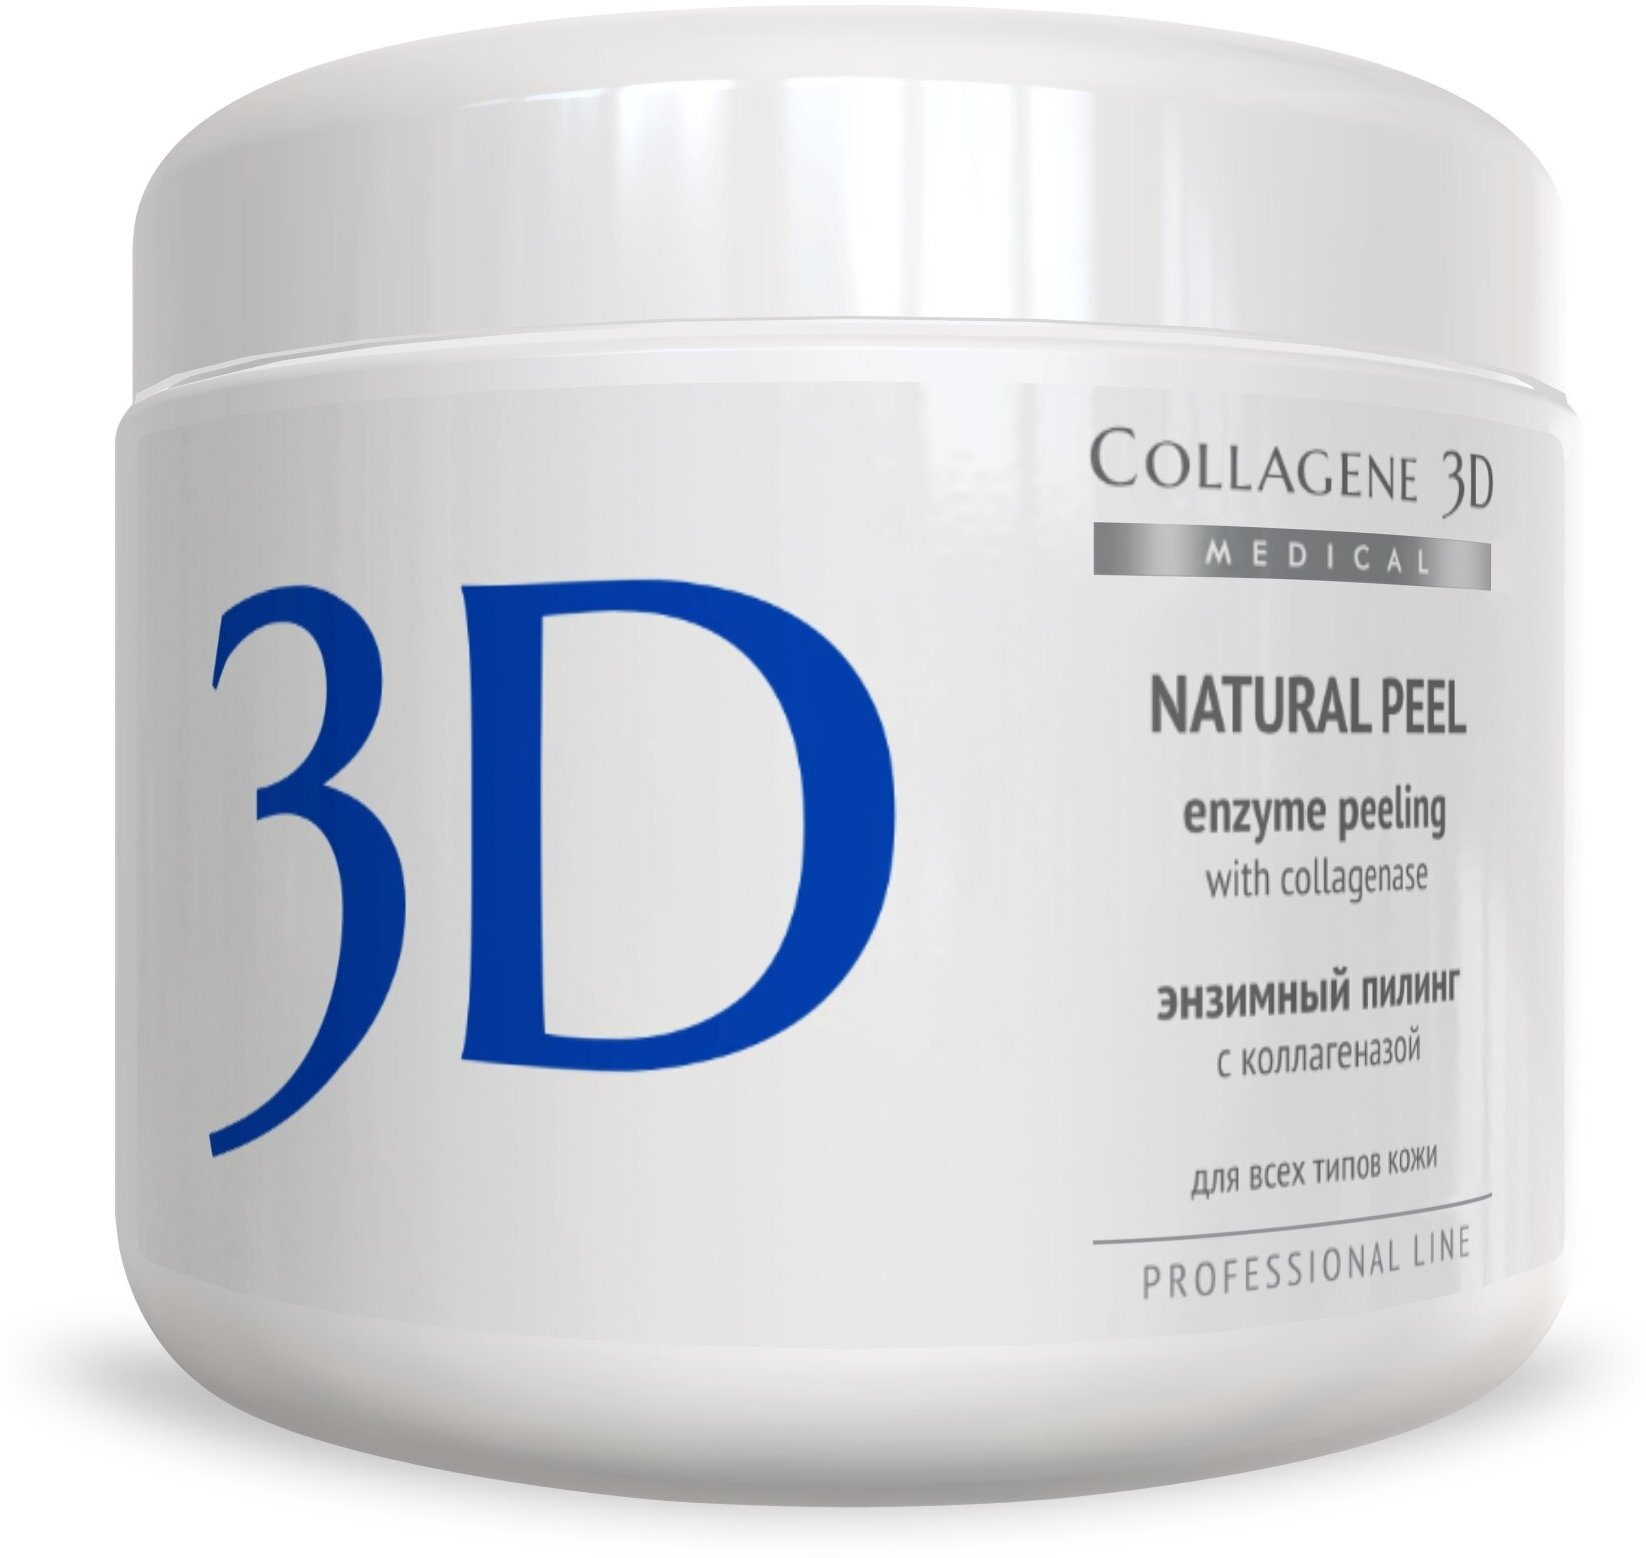 Пилинг с коллагеназой / Natural Peel 150 мл (medical collagene 3d)